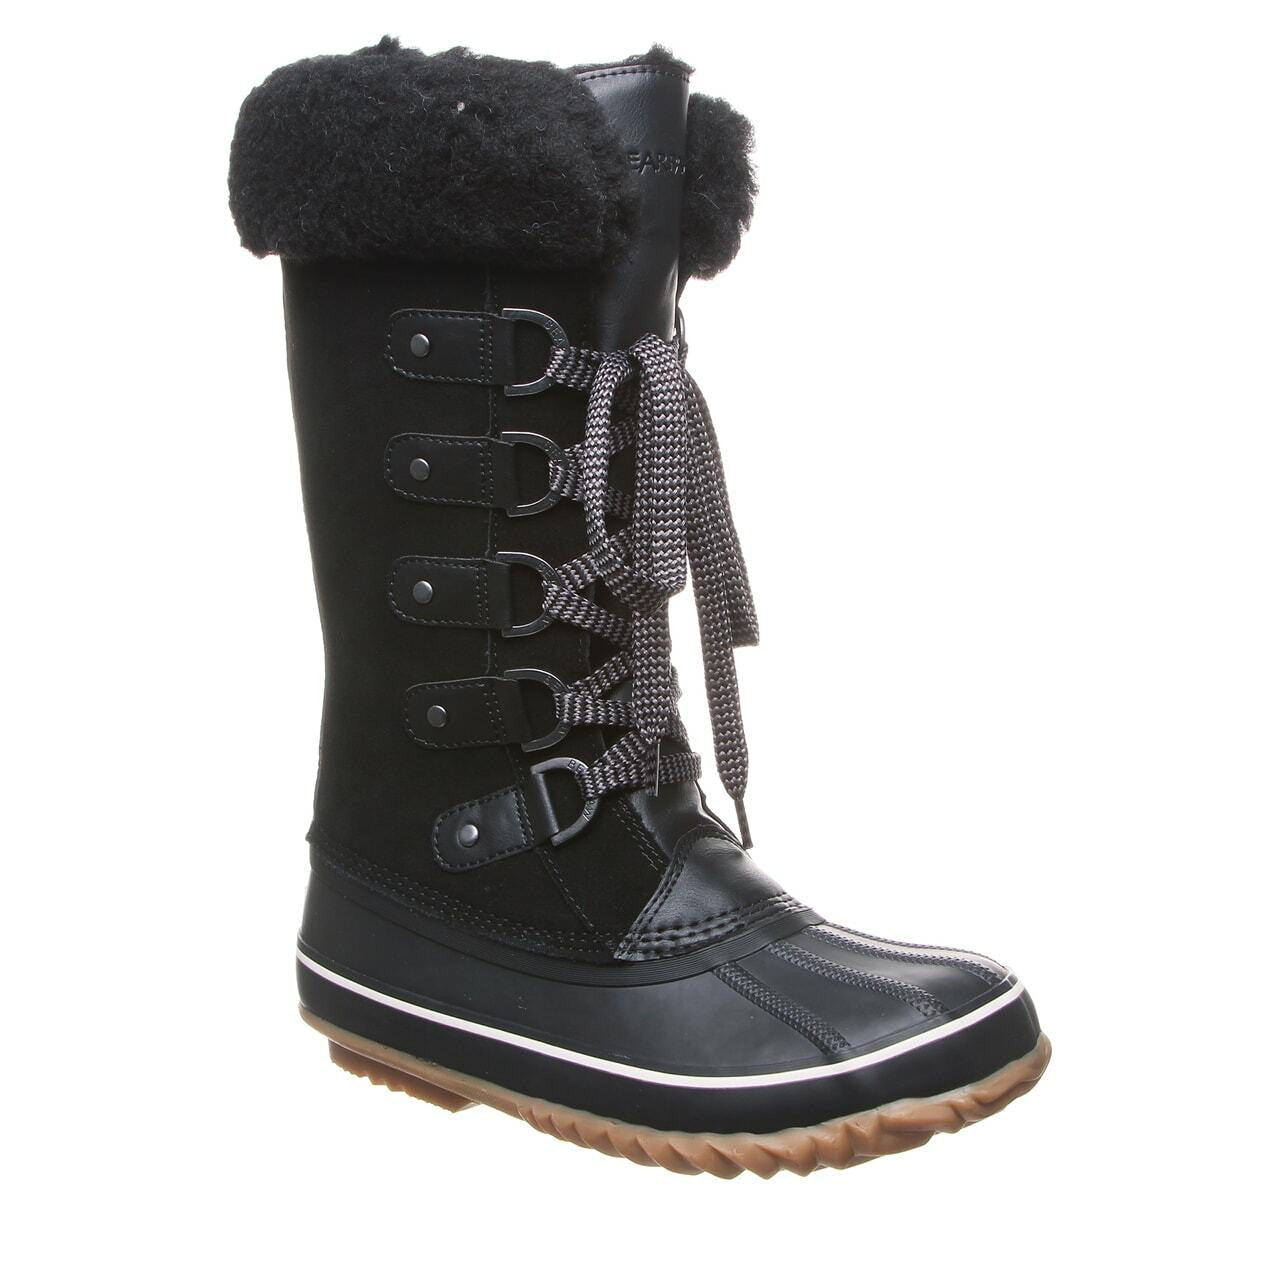 BEARPAW Denali Snow Boots